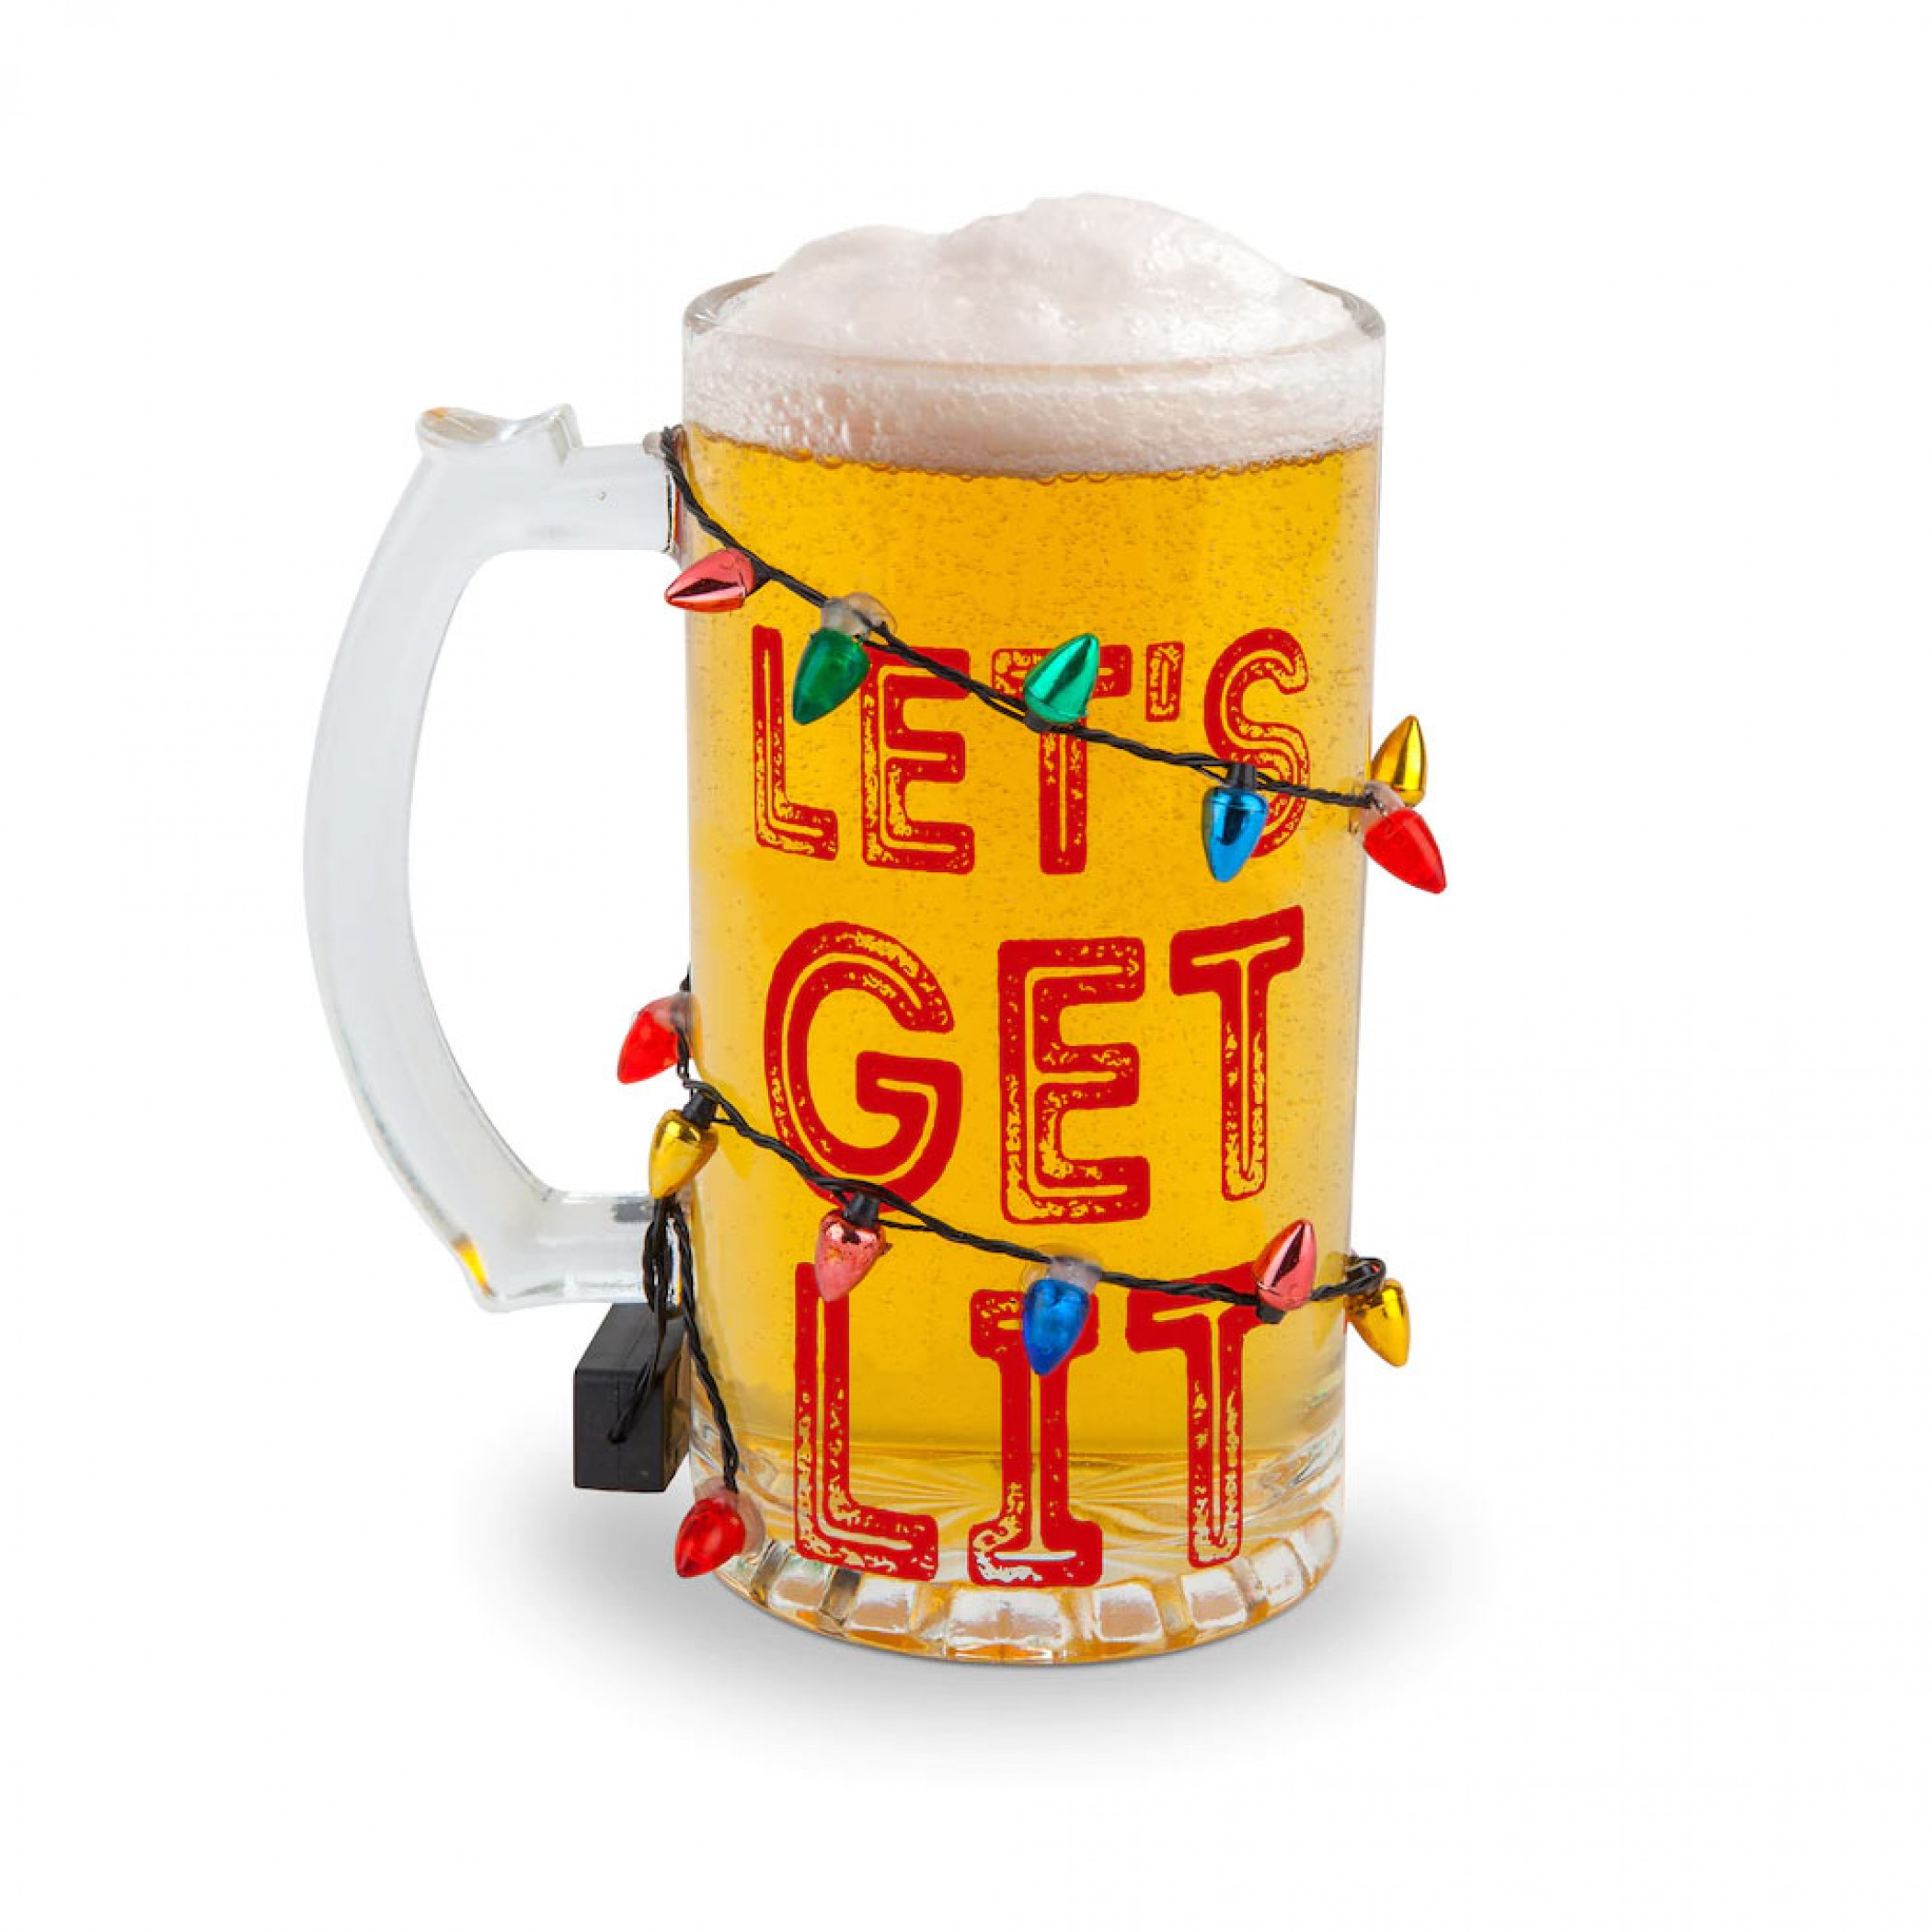 Let's Get Lit Holiday Beer Glass